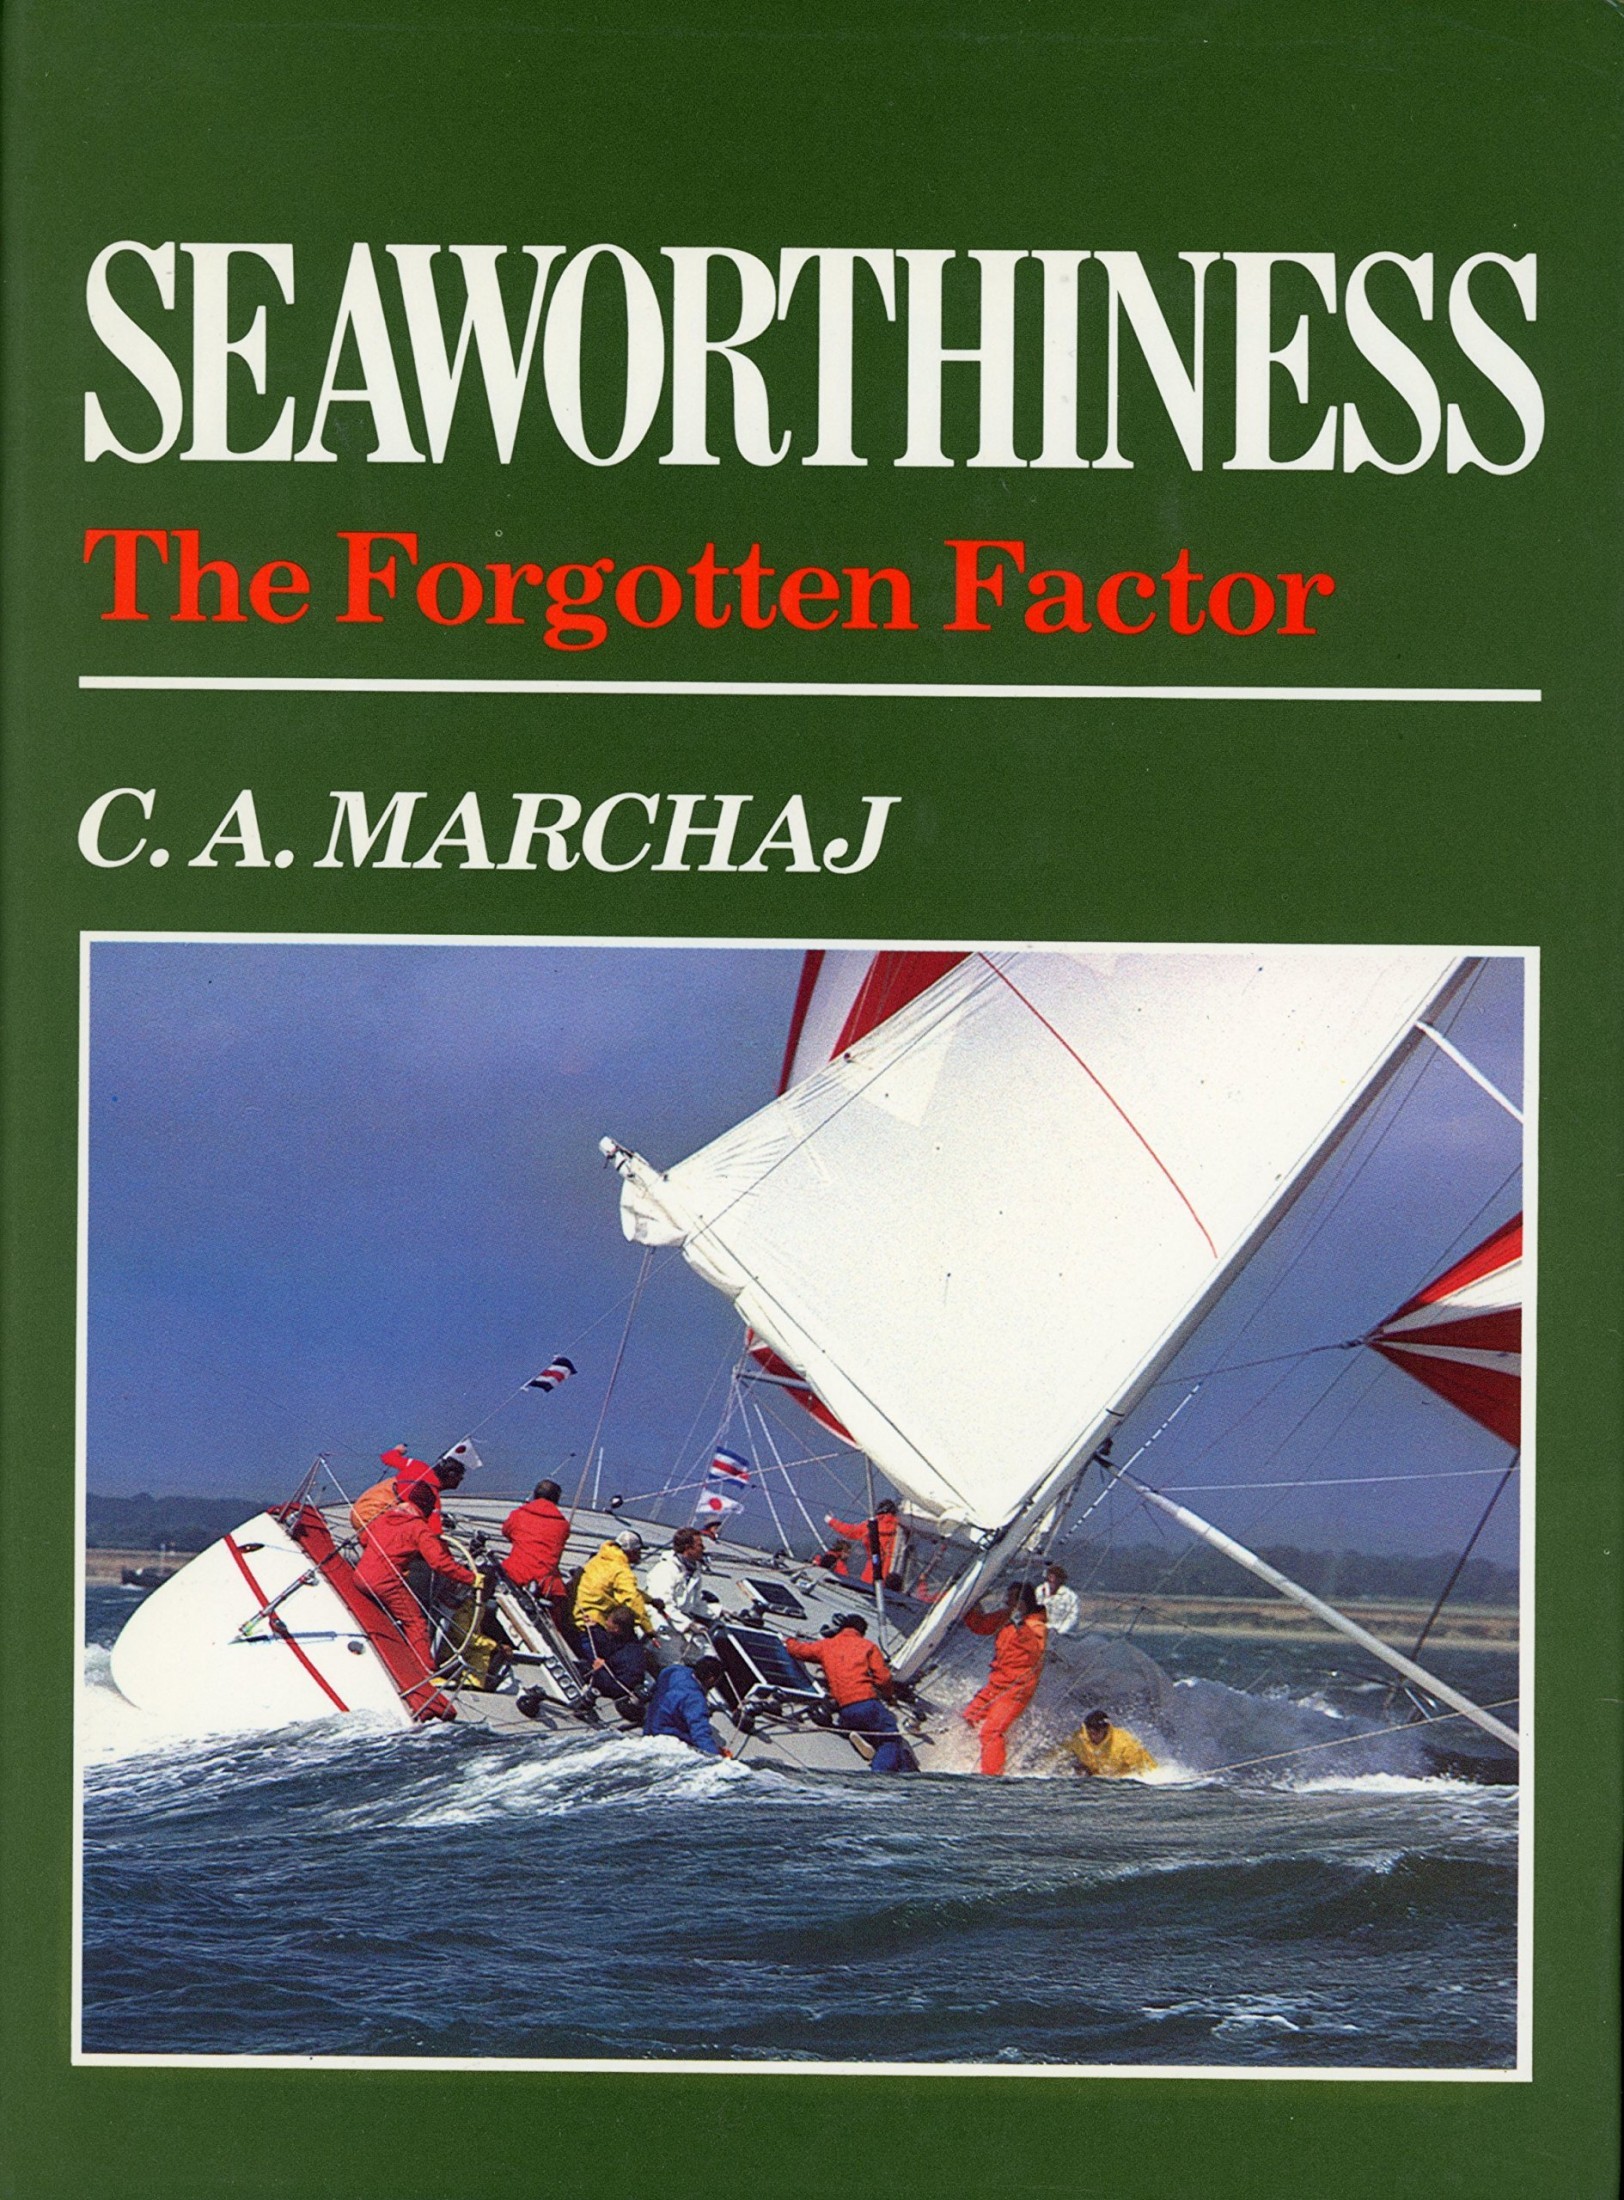 Seaworthiness: The Forgotten Factor